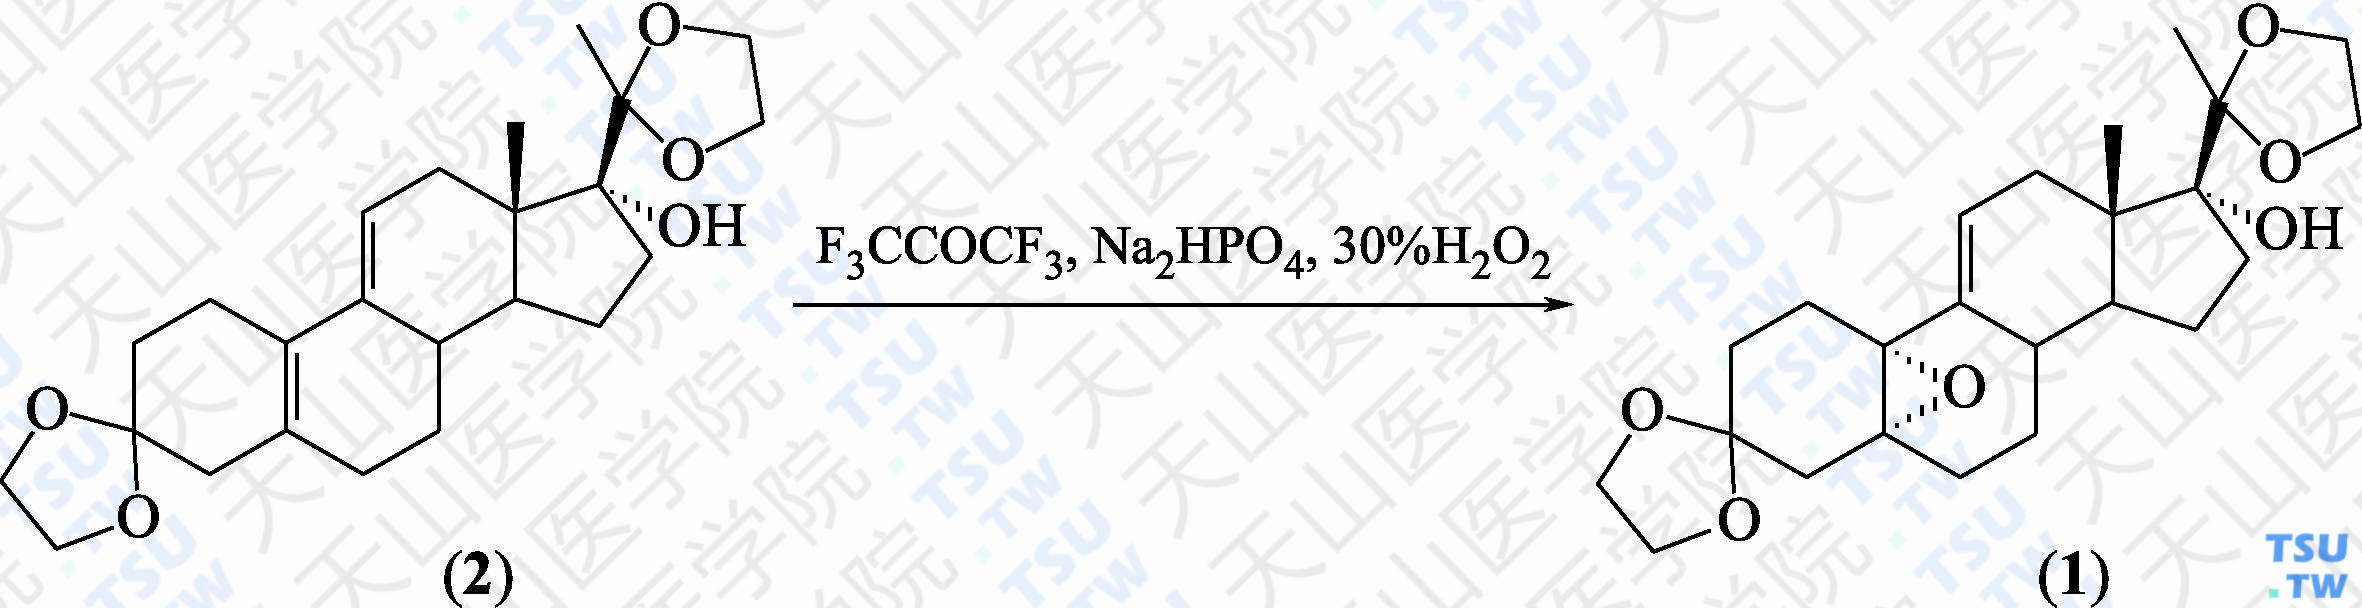 3，20-双-亚乙二氧基-17<i>α</i>-羟基-5<i>α</i>，10<i>α</i>-环氧-19-去甲孕甾-9（11）-烯（分子式：C<sub>24</sub>H<sub>34</sub>O<sub>6</sub>）的合成方法路线及其结构式